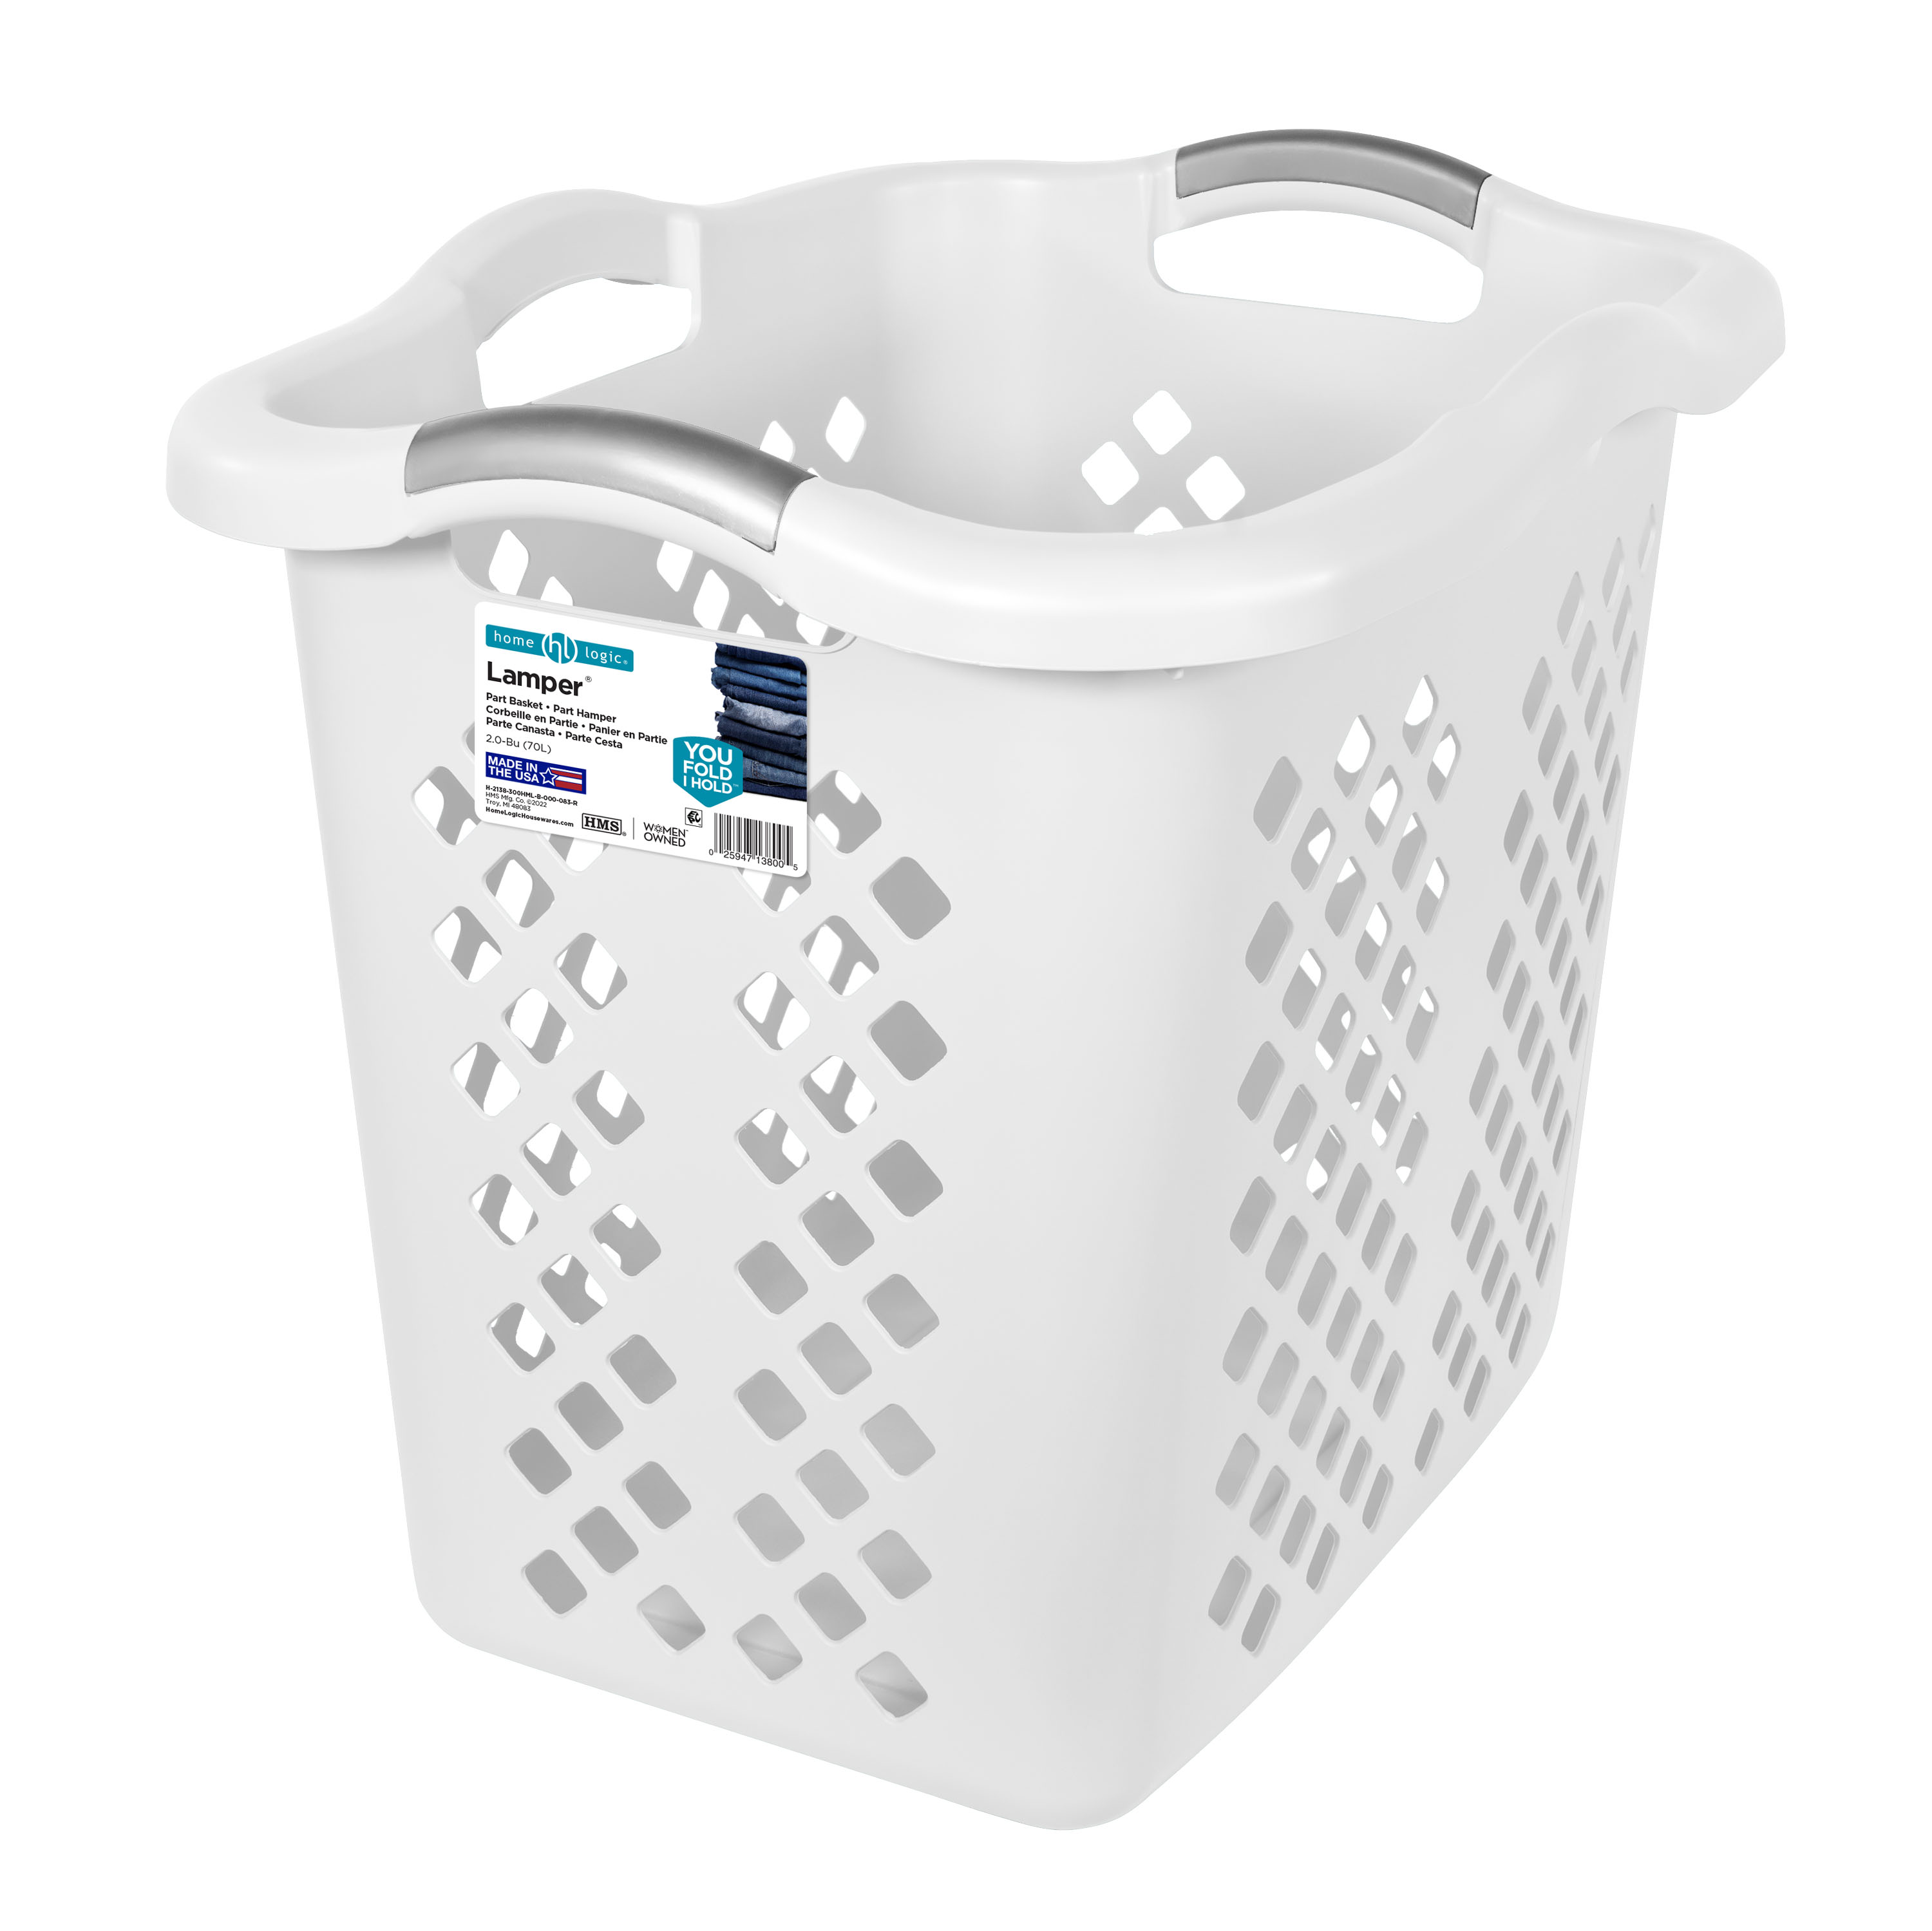 Home Logic 2 Bushel Lamper Laundry Basket with Silver Handles, White - image 1 of 8